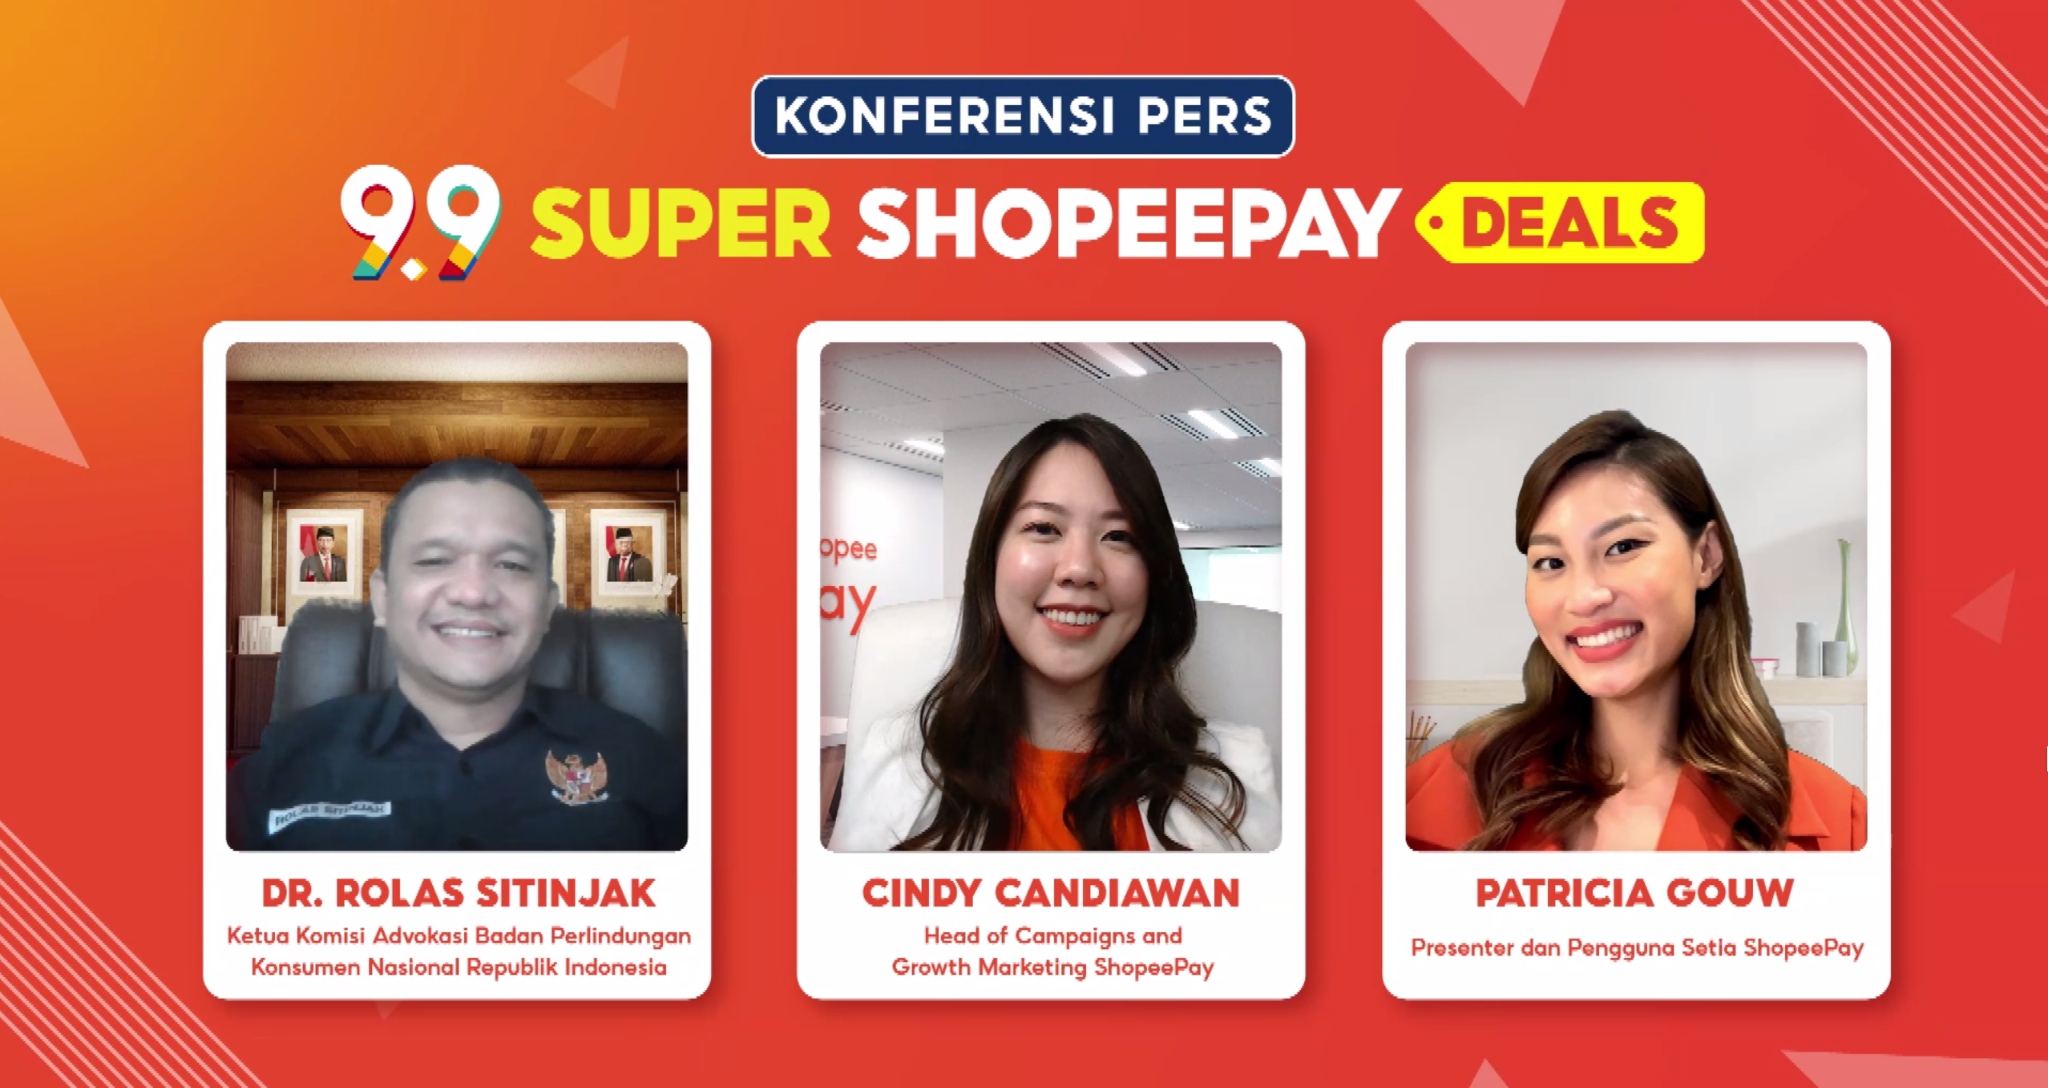 9.9 Super ShopeePay Deals: Dapatkan Penawaran dan Pengalaman Transaksi Digital Terbaik!